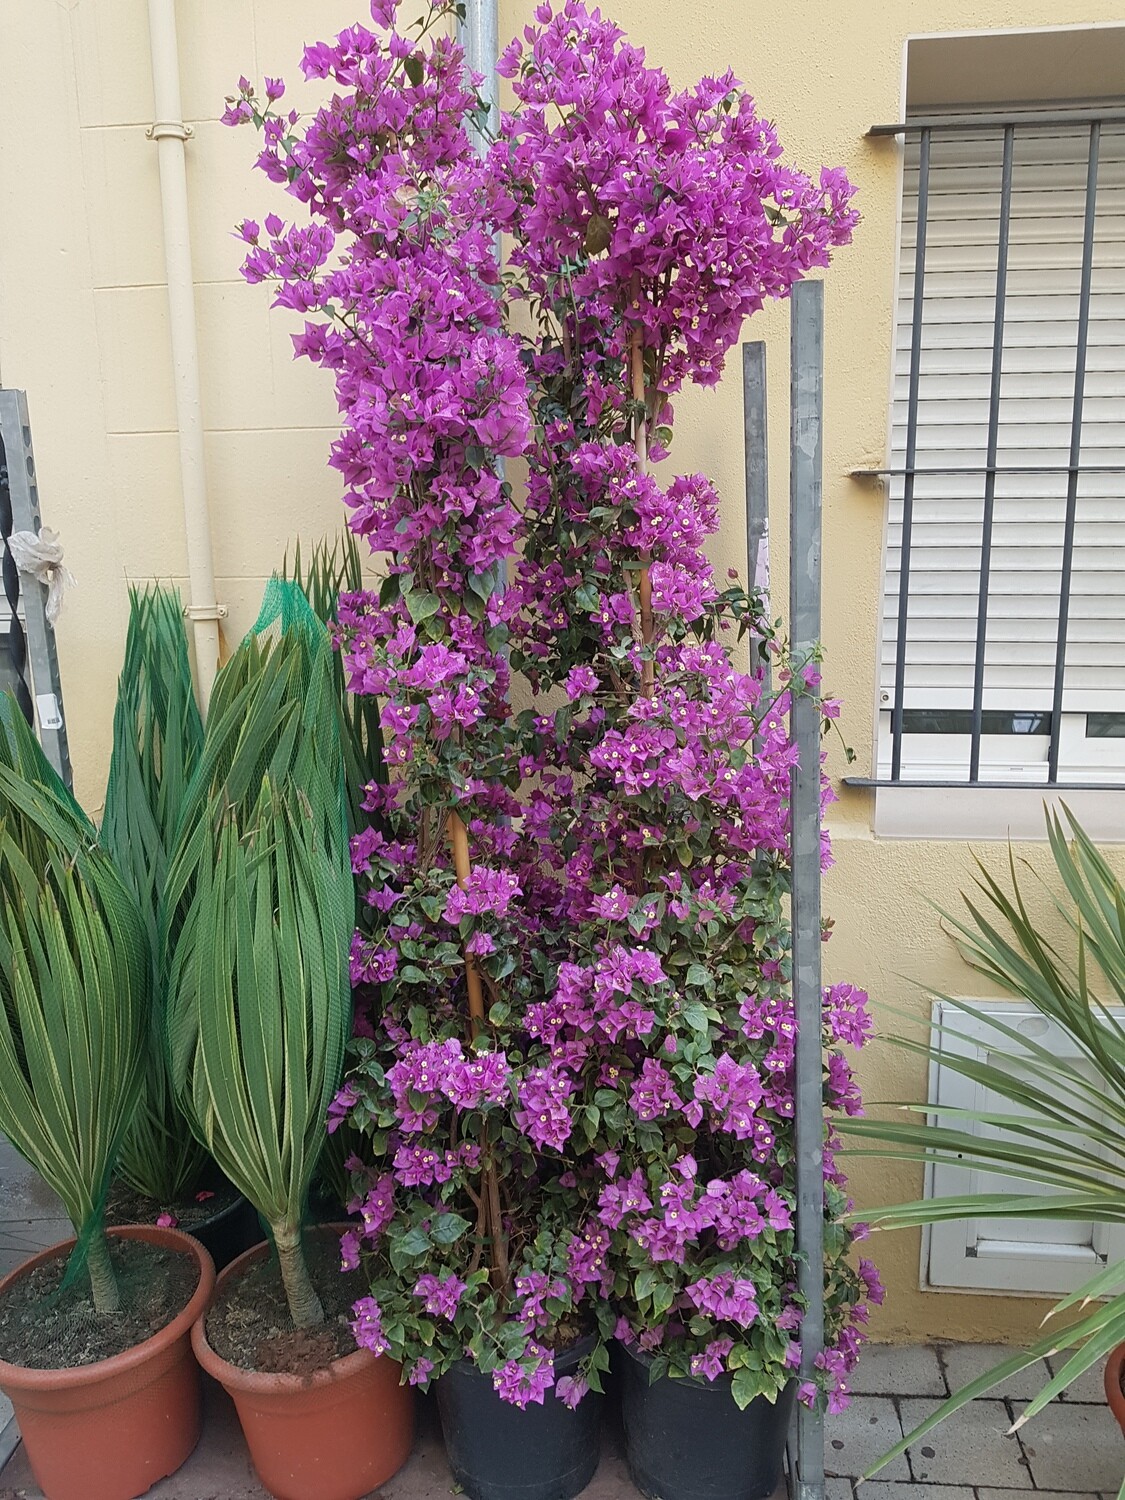 "AmaPlant Buganvilla" planta trepadora de flores violetas, rosadas o rojizas 180-200 cm 15 L 1 tutor (trepadora) - Exterior a pleno sol